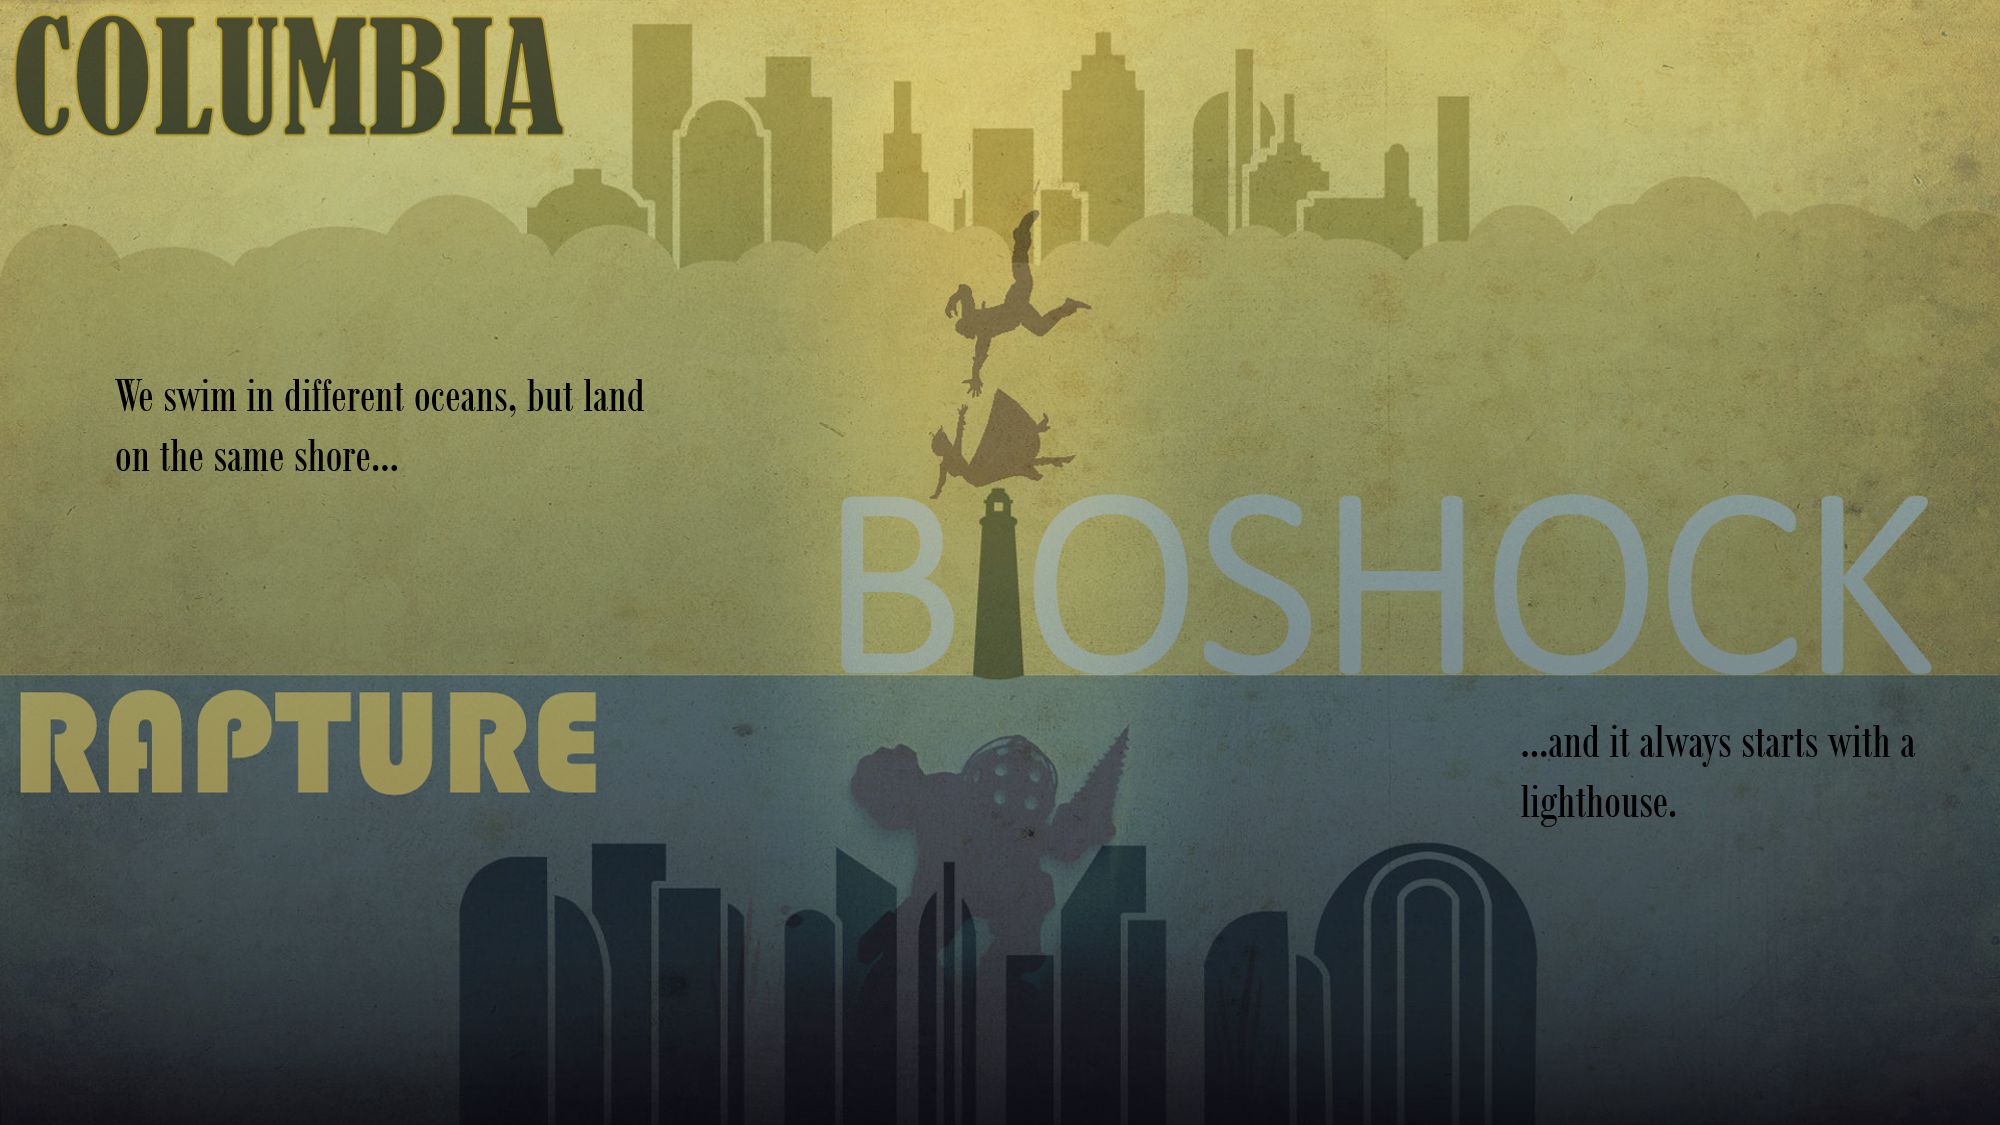 BioShock Infinite Wallpaper For Phone  Wallpaperforu